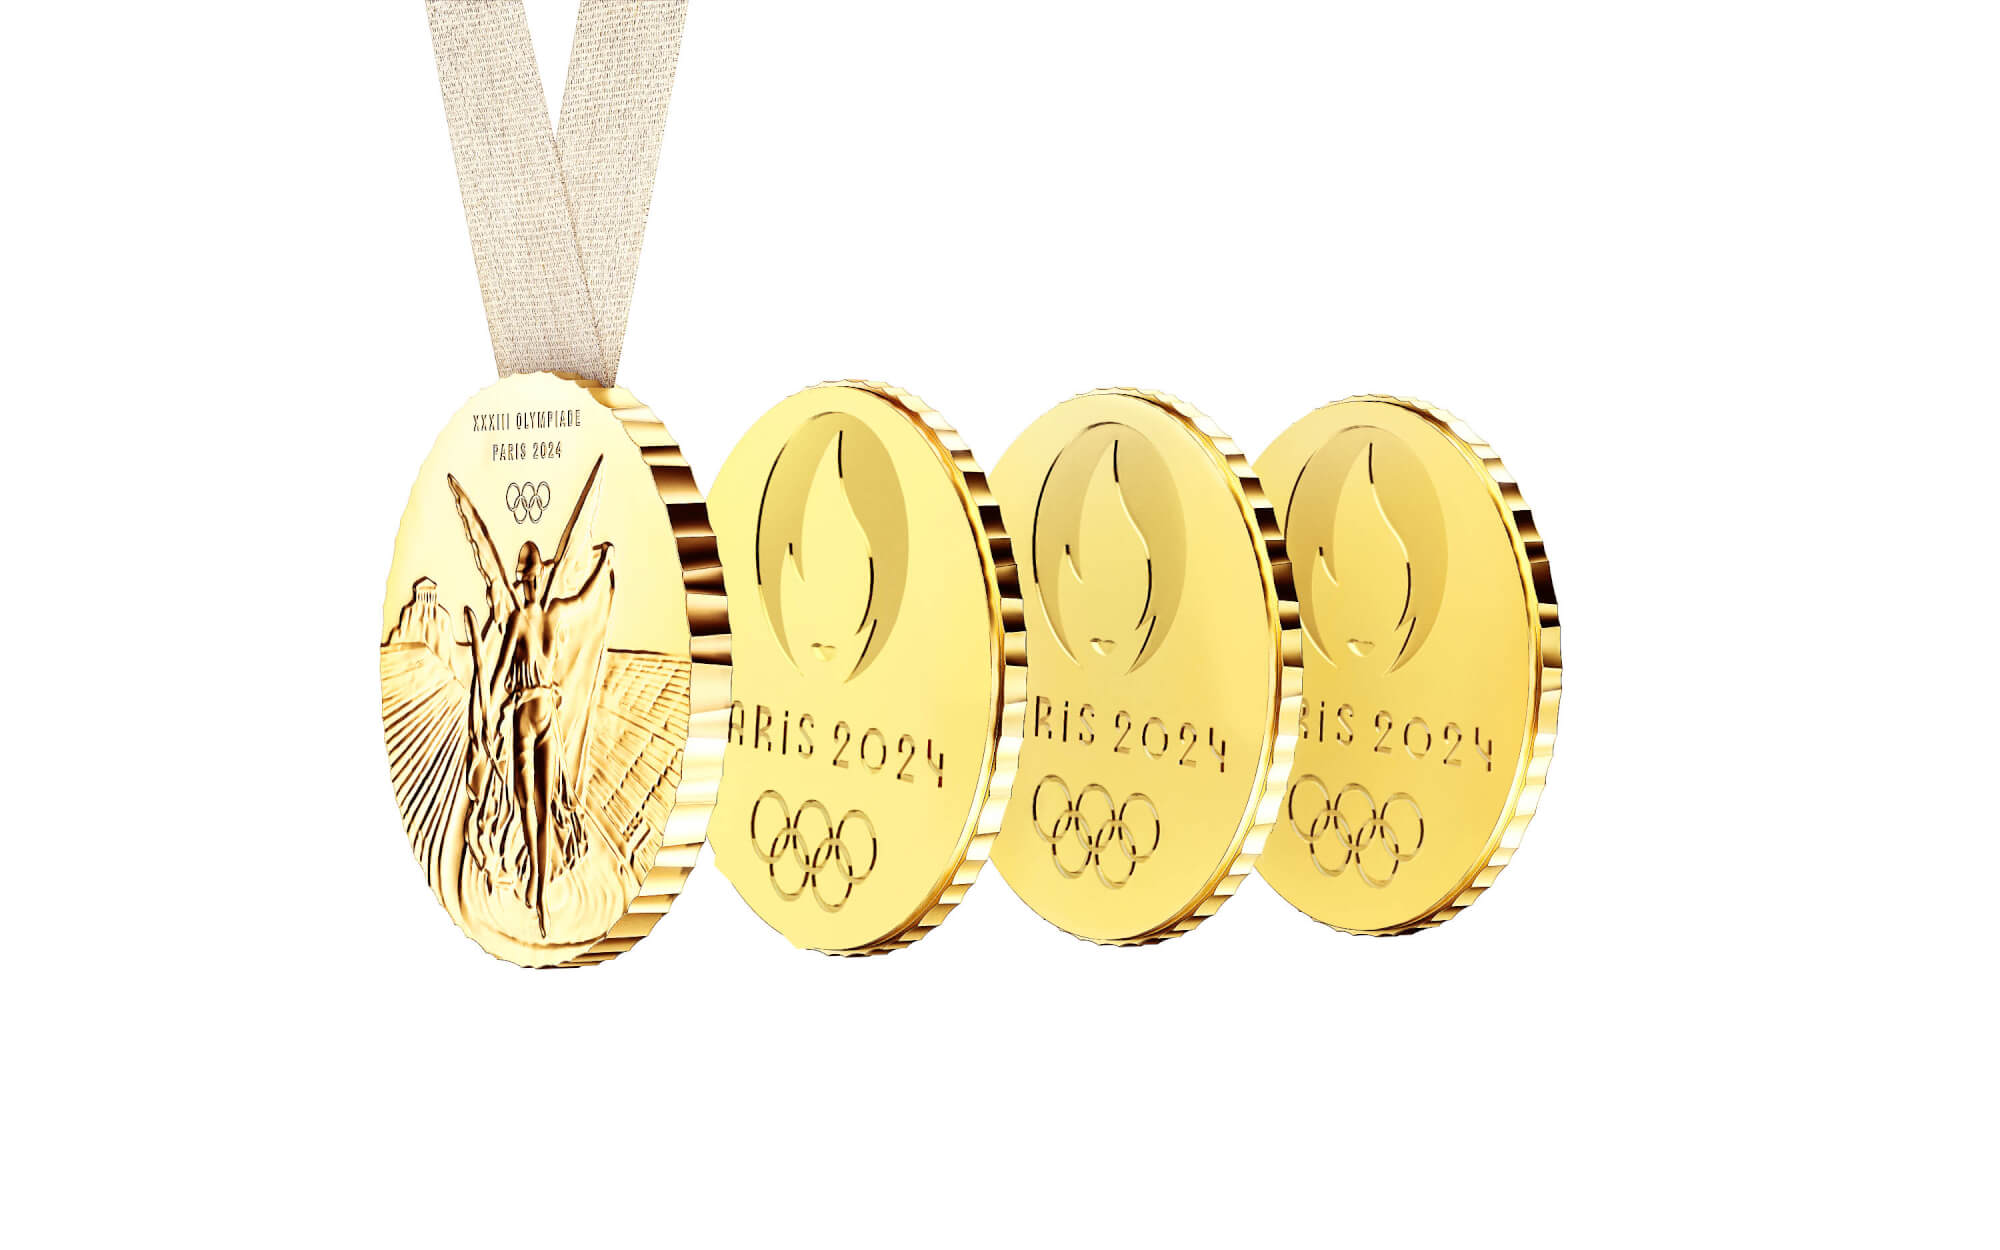 Desain Medali Olimpiade Paris 2024 (Dok. starck.com)